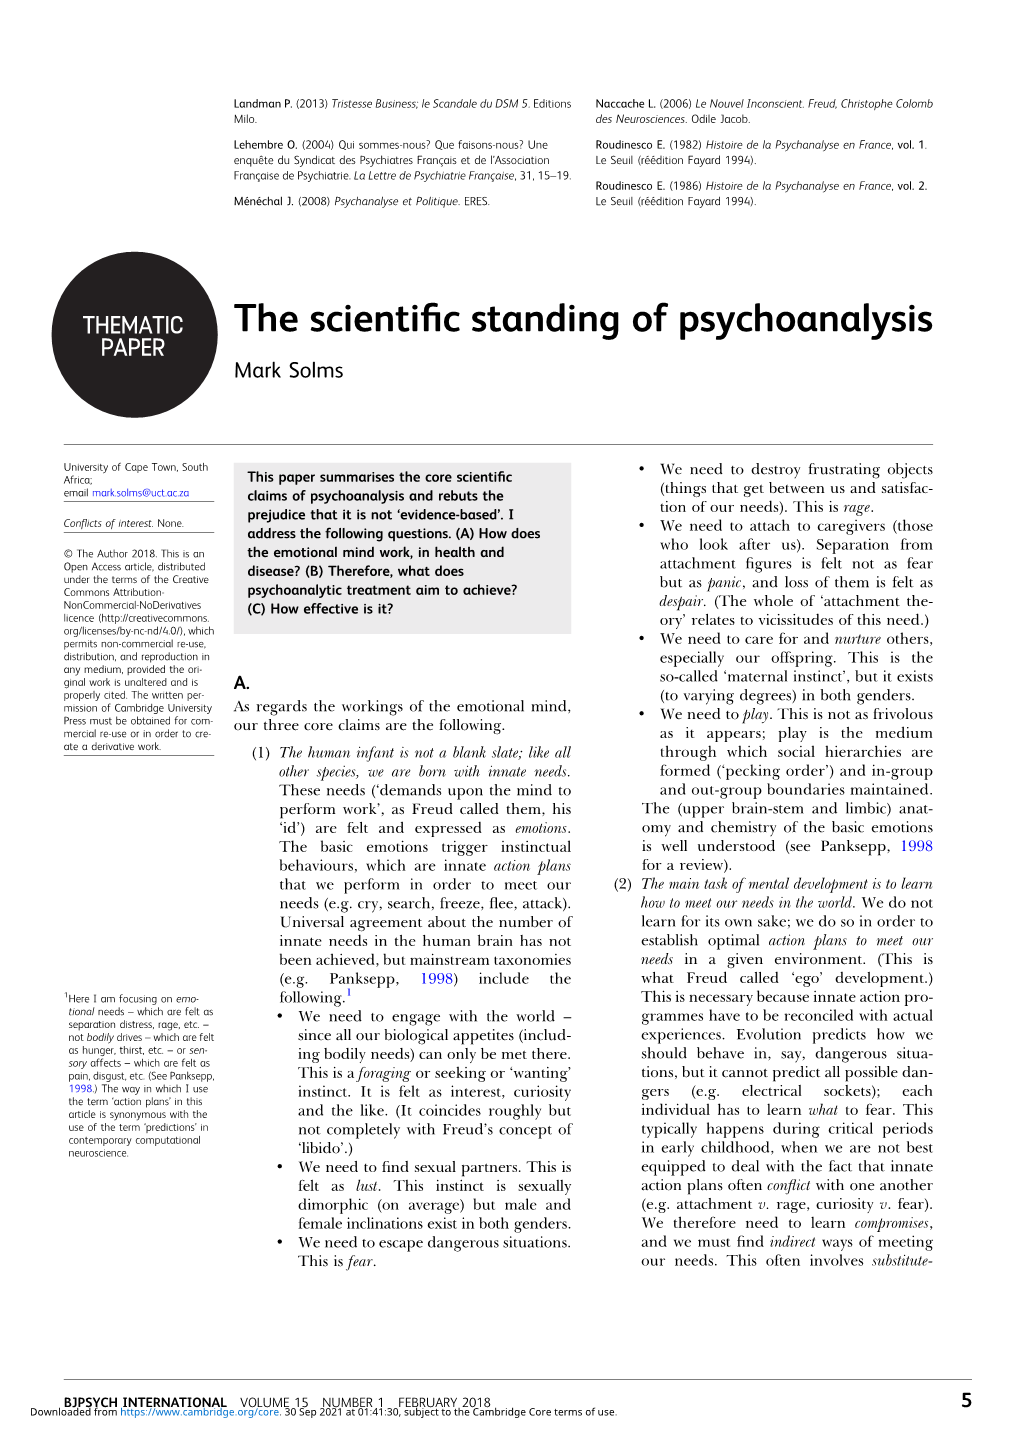 The Scientific Standing of Psychoanalysis